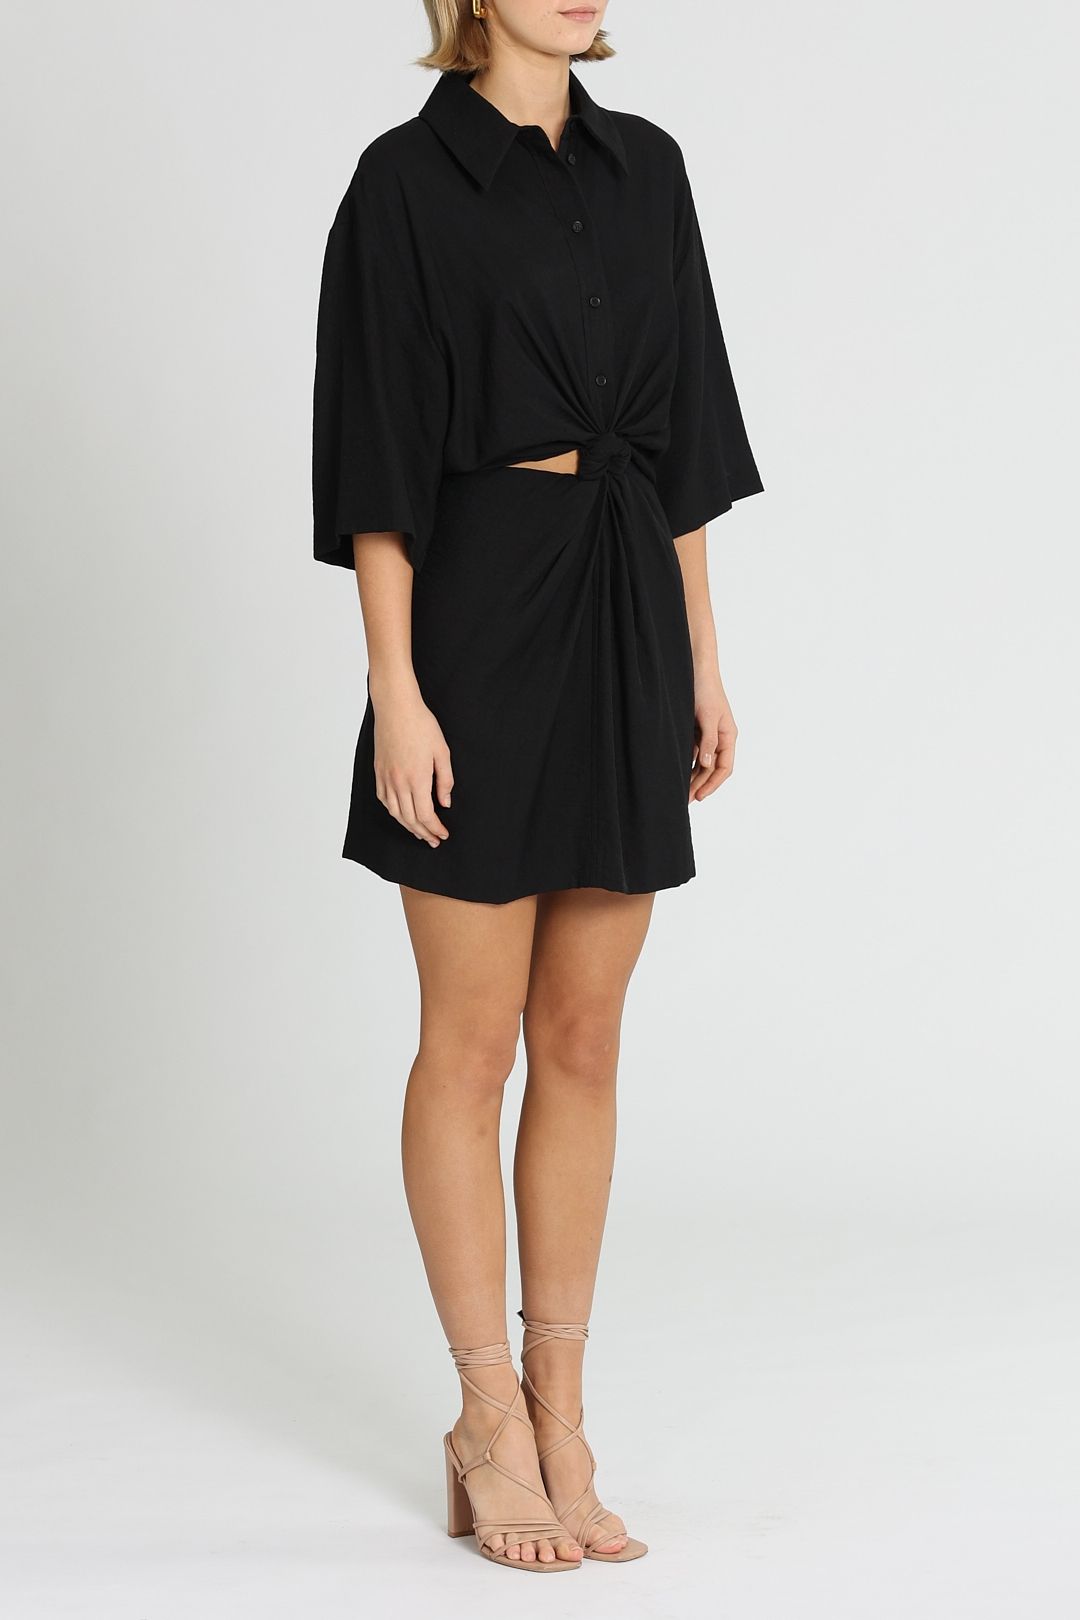 Prado Mini Dress - Black